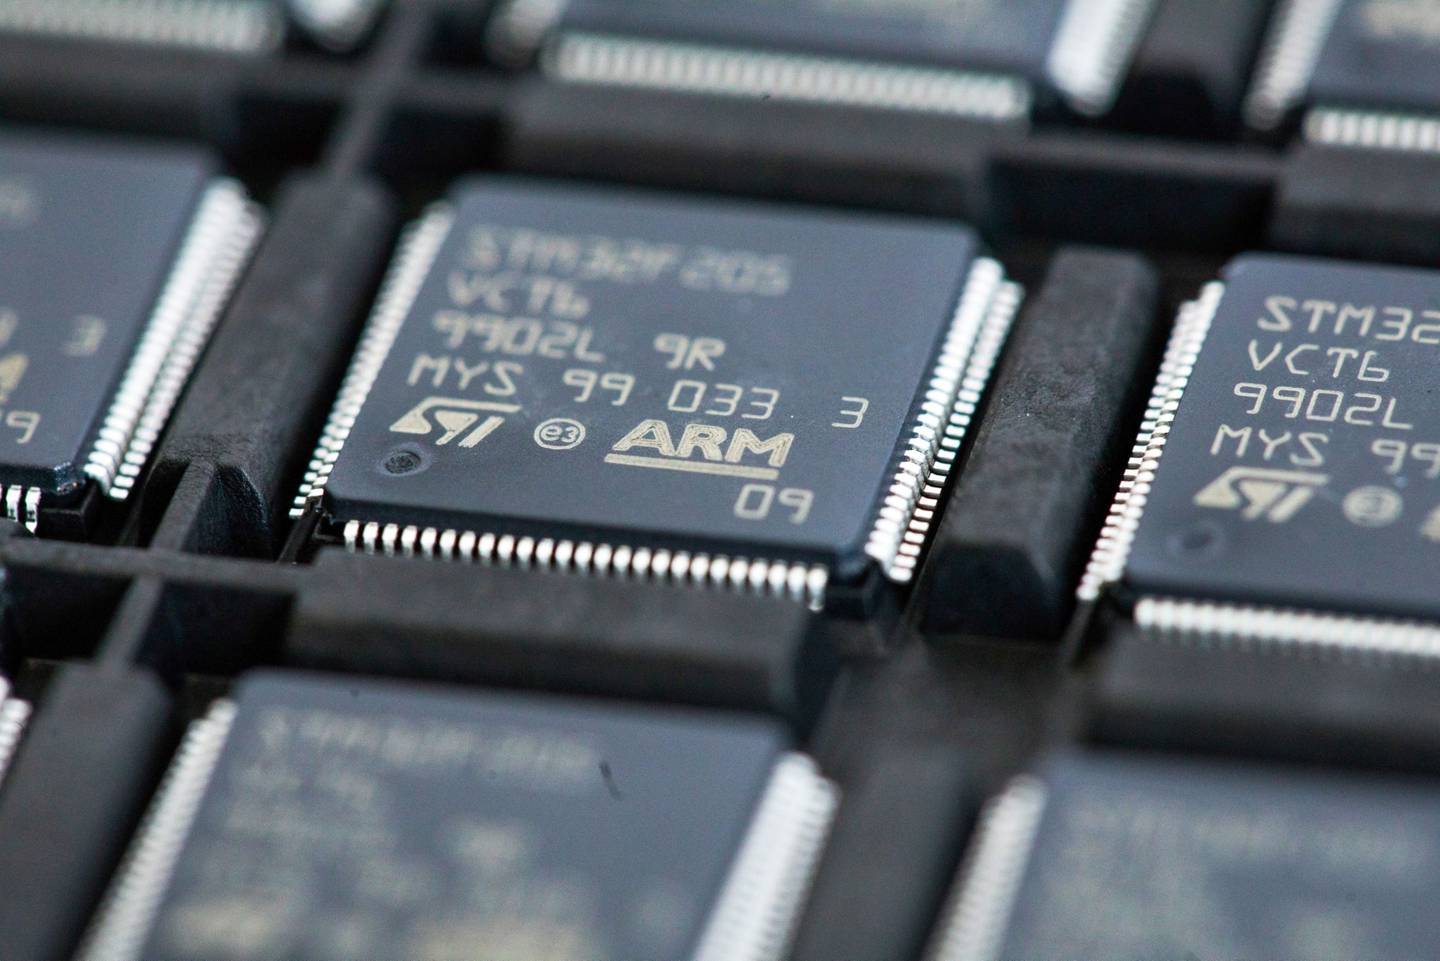 Microchips de circuito integrado STM32F205 de STMicroelectronics, diseñados por ARM Ltd., en una bandeja de almacenamiento en CSI Electronic Manufacturing Services Ltd. en Witham, Reino Unido